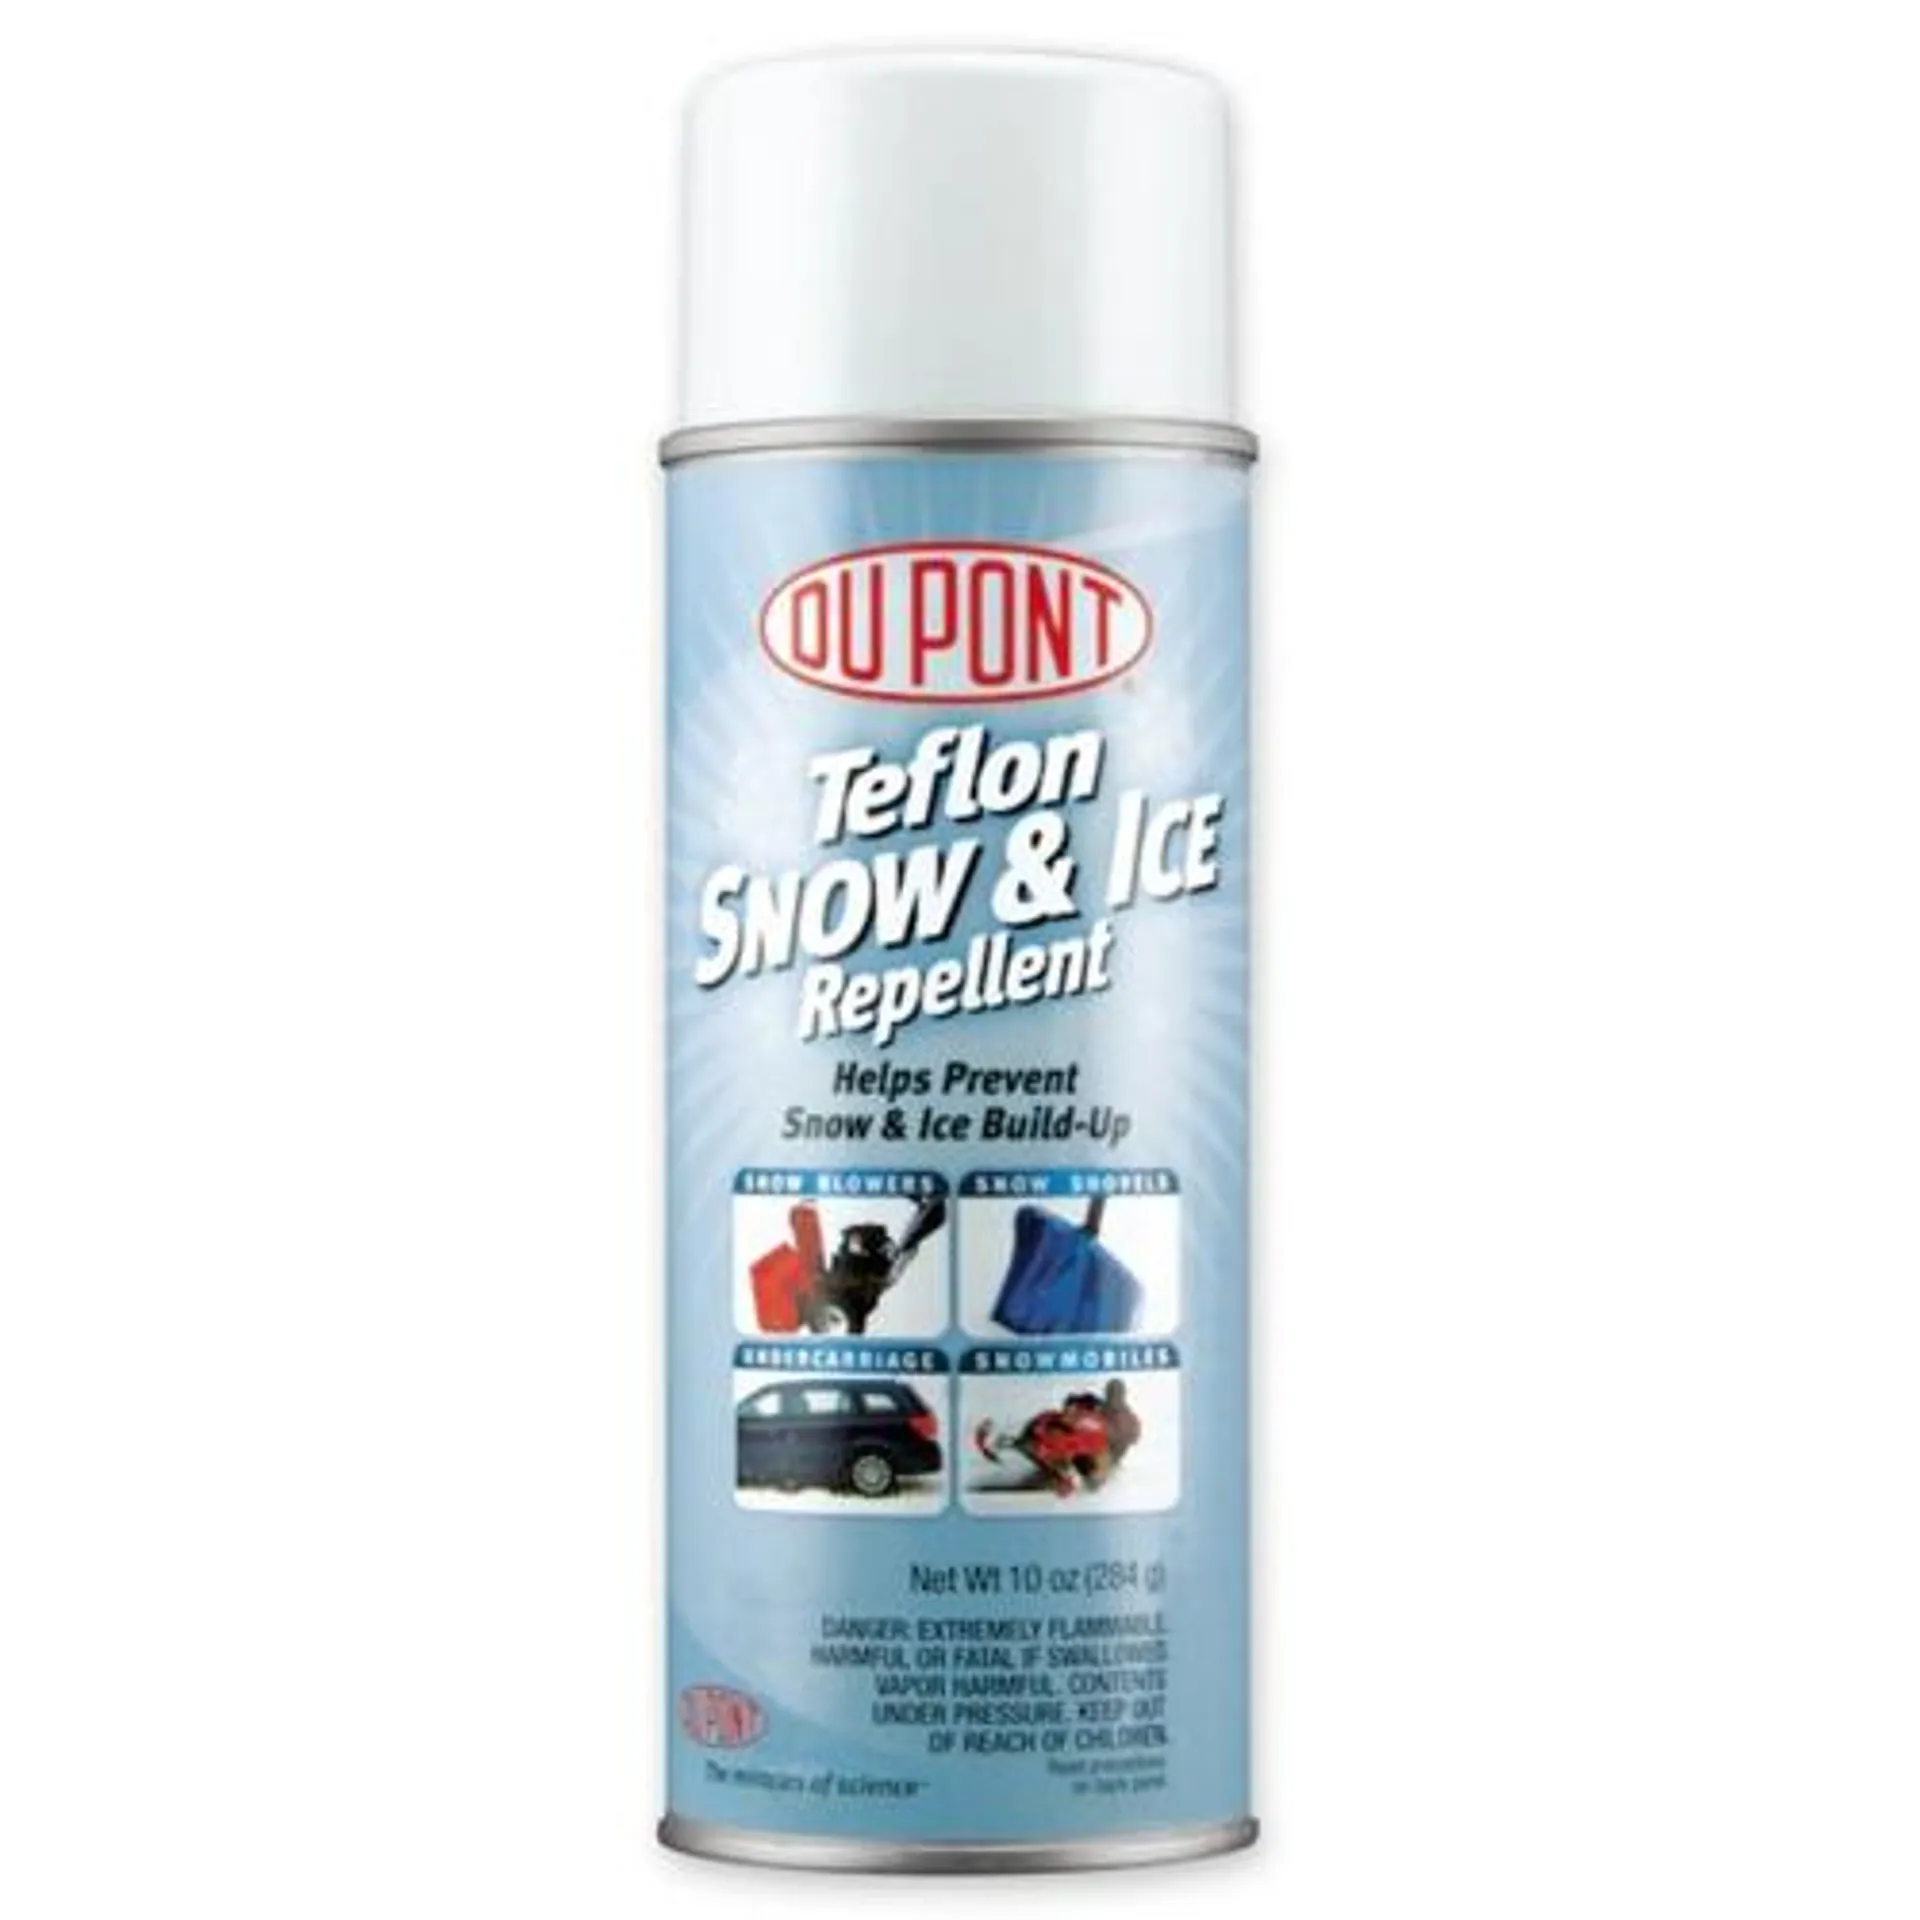 DuPont Teflon Snow & Ice Repellent